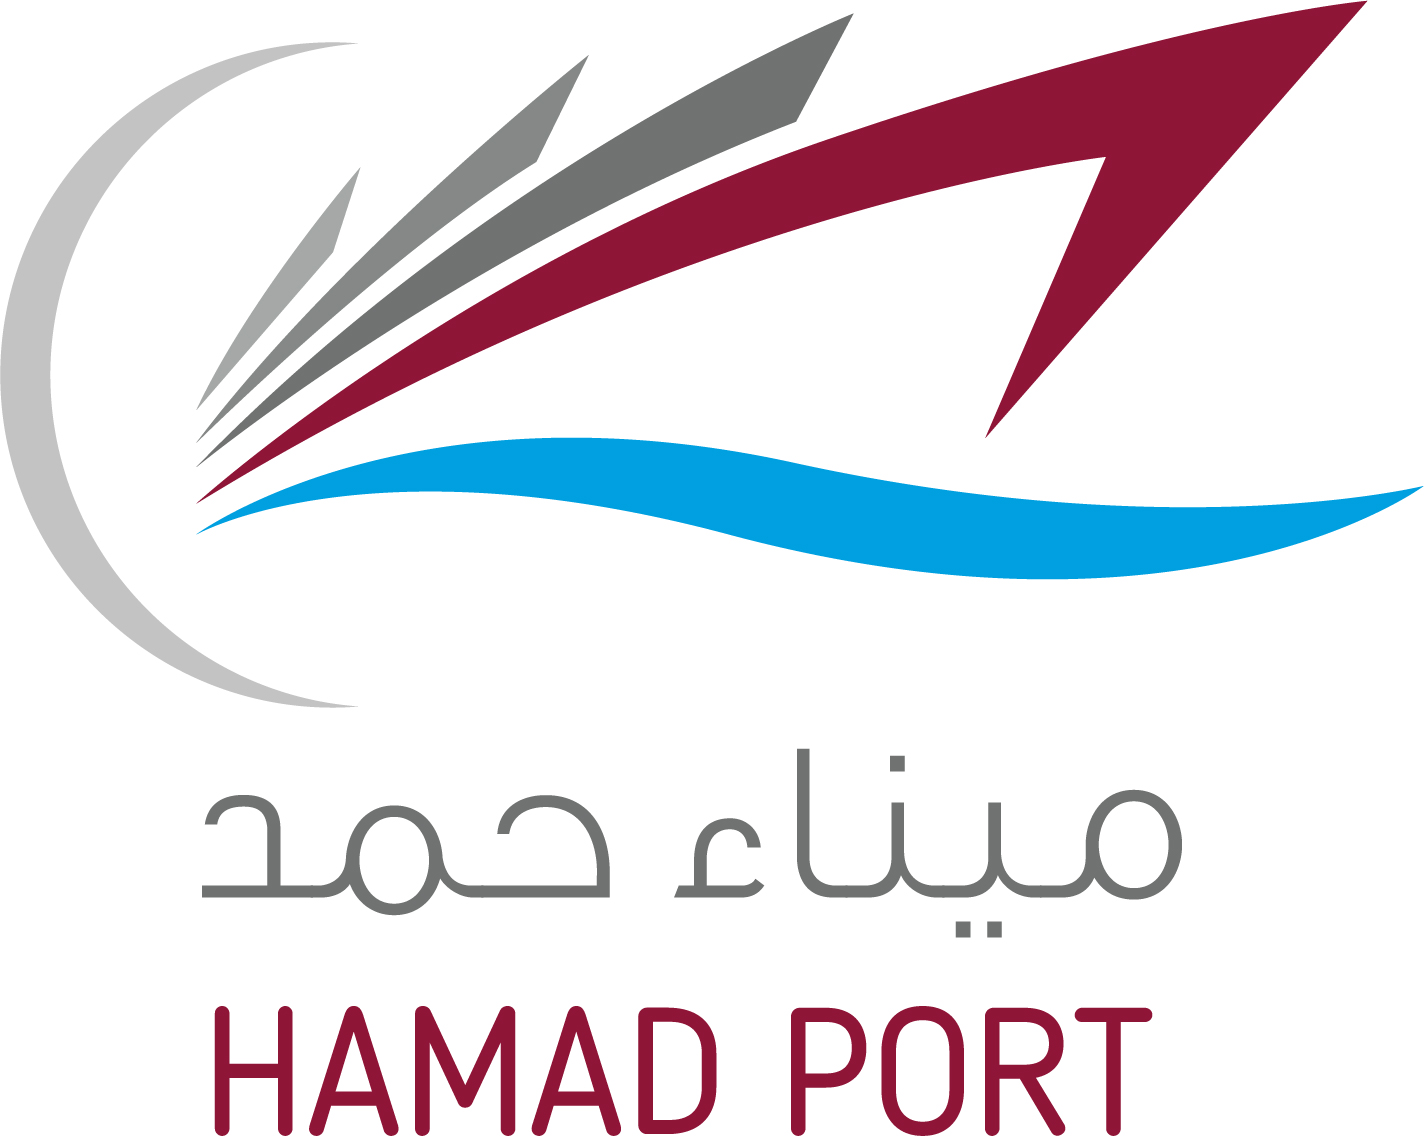 Qatar to build new port in Somalia’s Hobyo